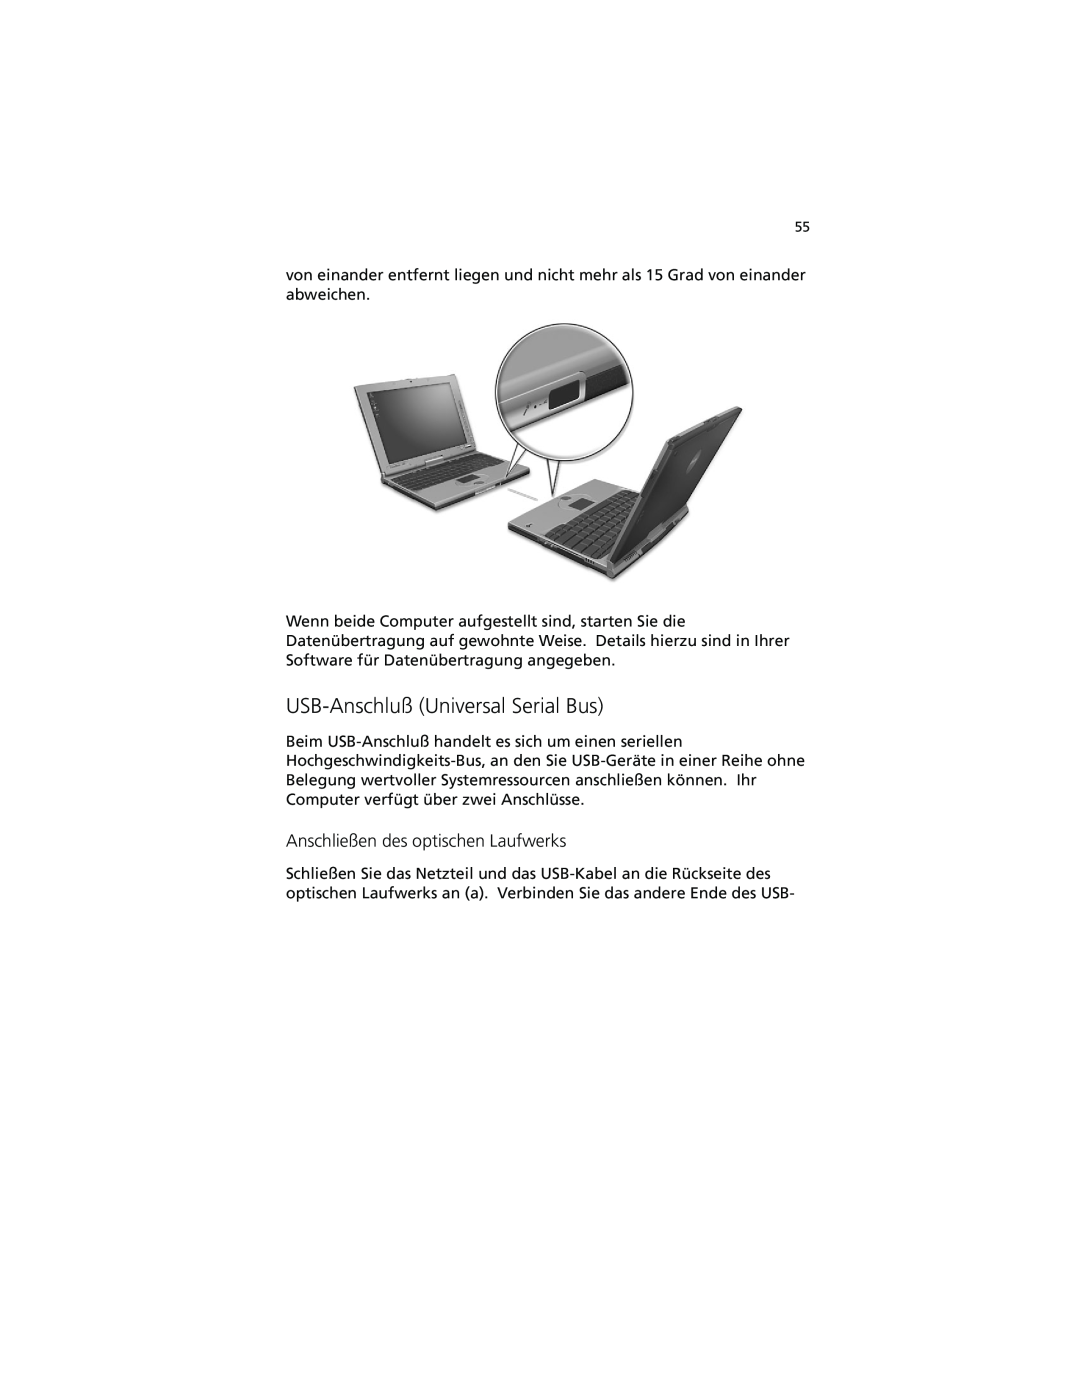 Acer C100-Series manual USB-Anschluß Universal Serial Bus, Anschließen des optischen Laufwerks 